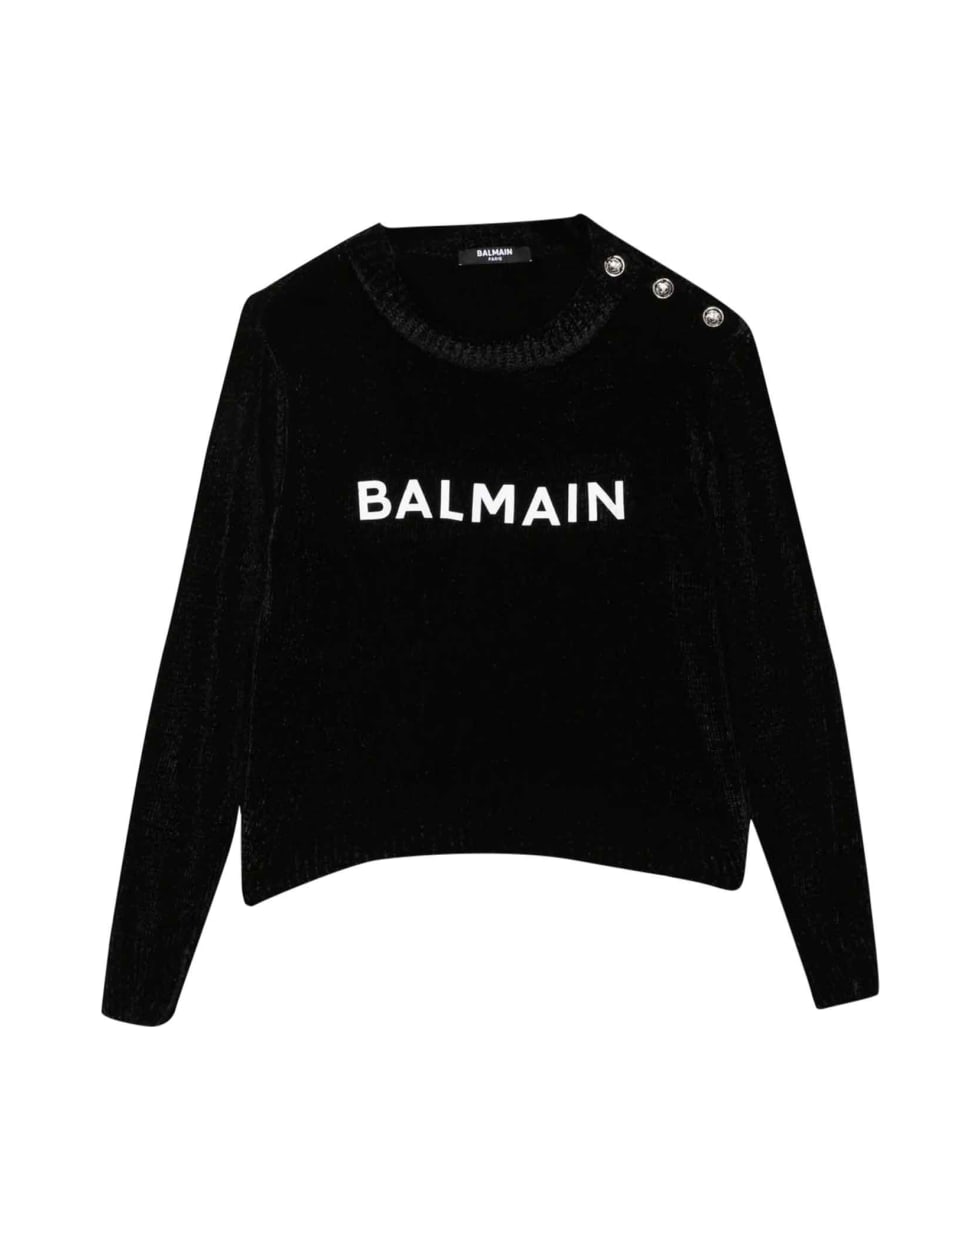 Balmain Unisex Black Sweater - Nero/bianco